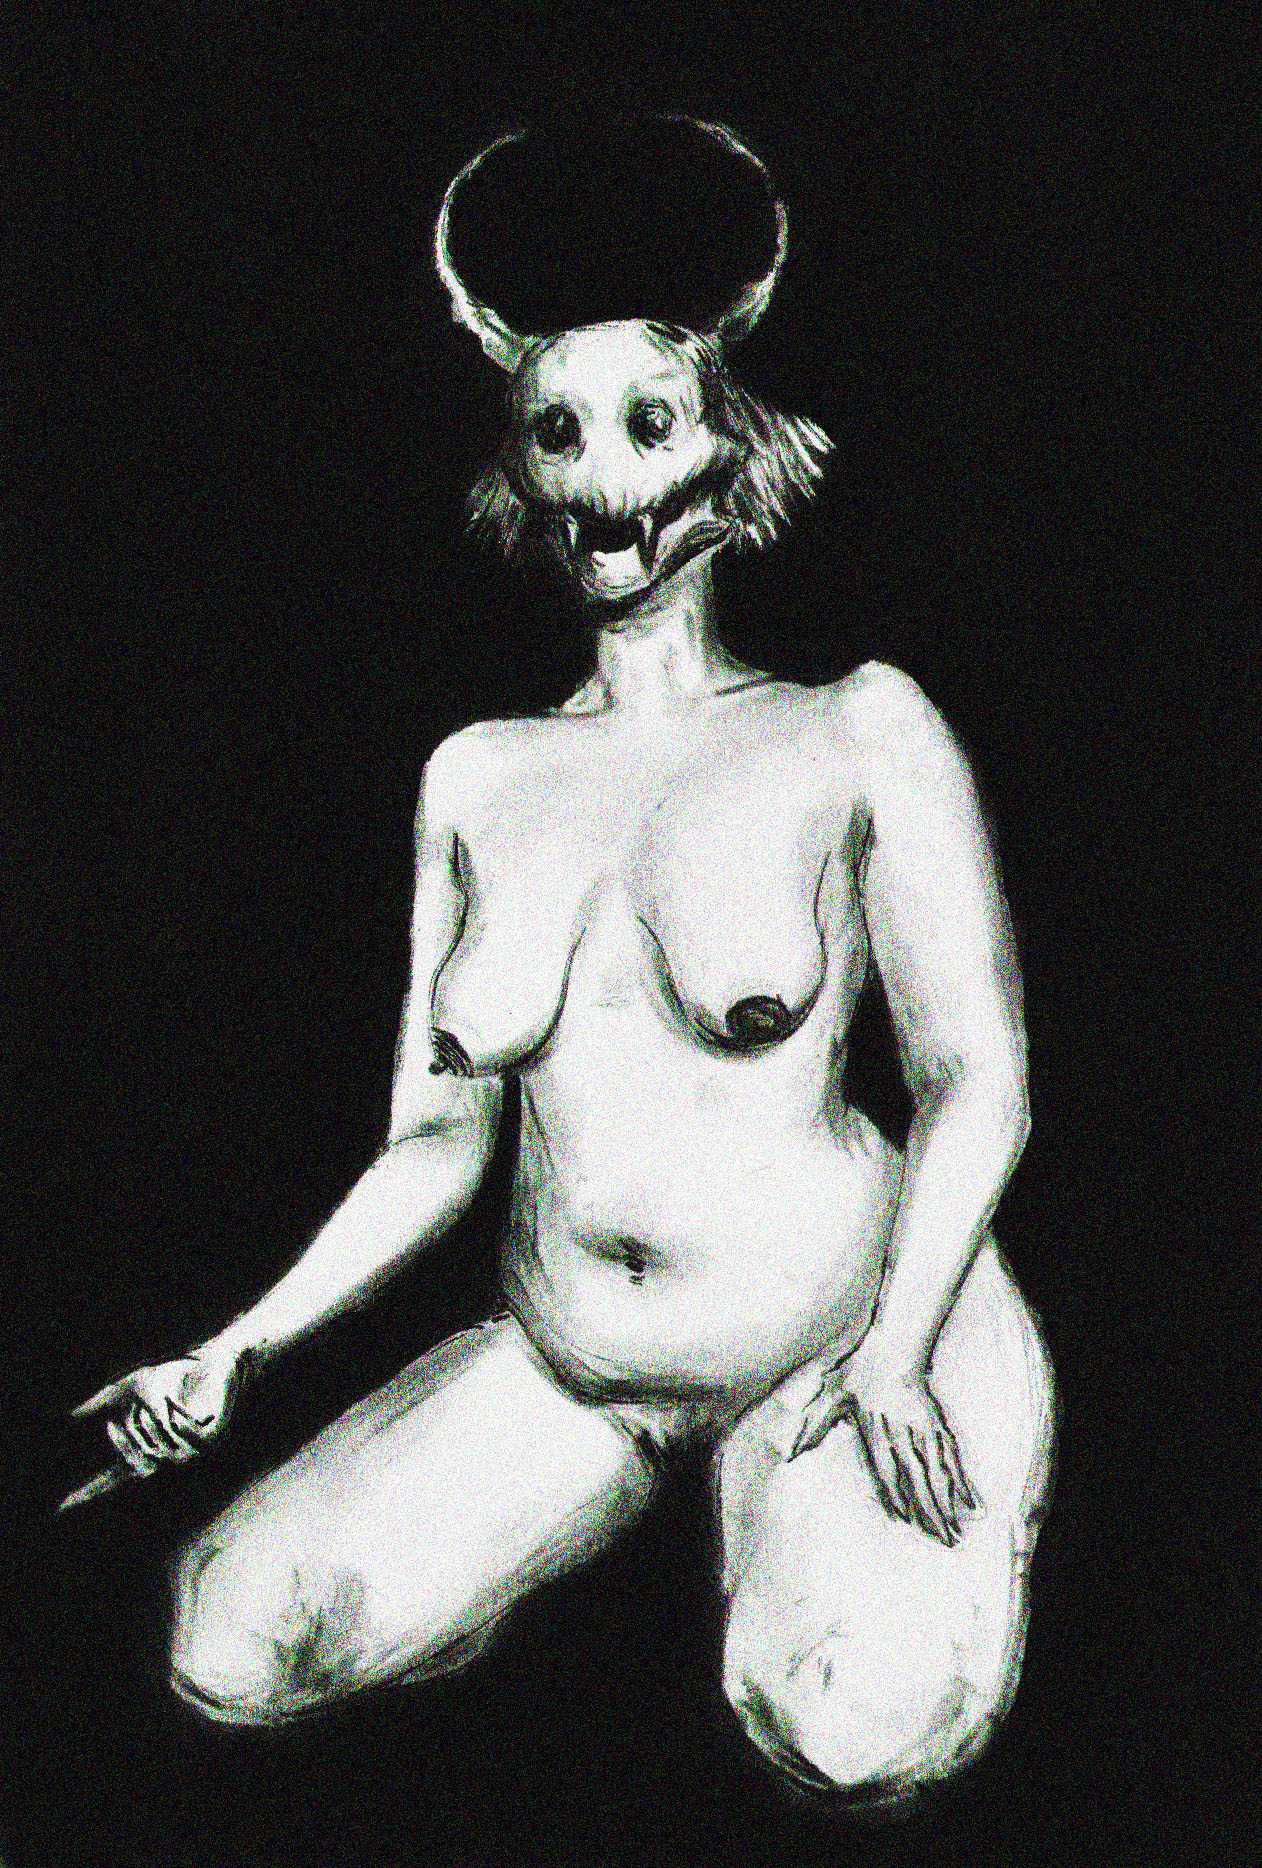 An illustration by Leah McGhee showing a demonic figure.